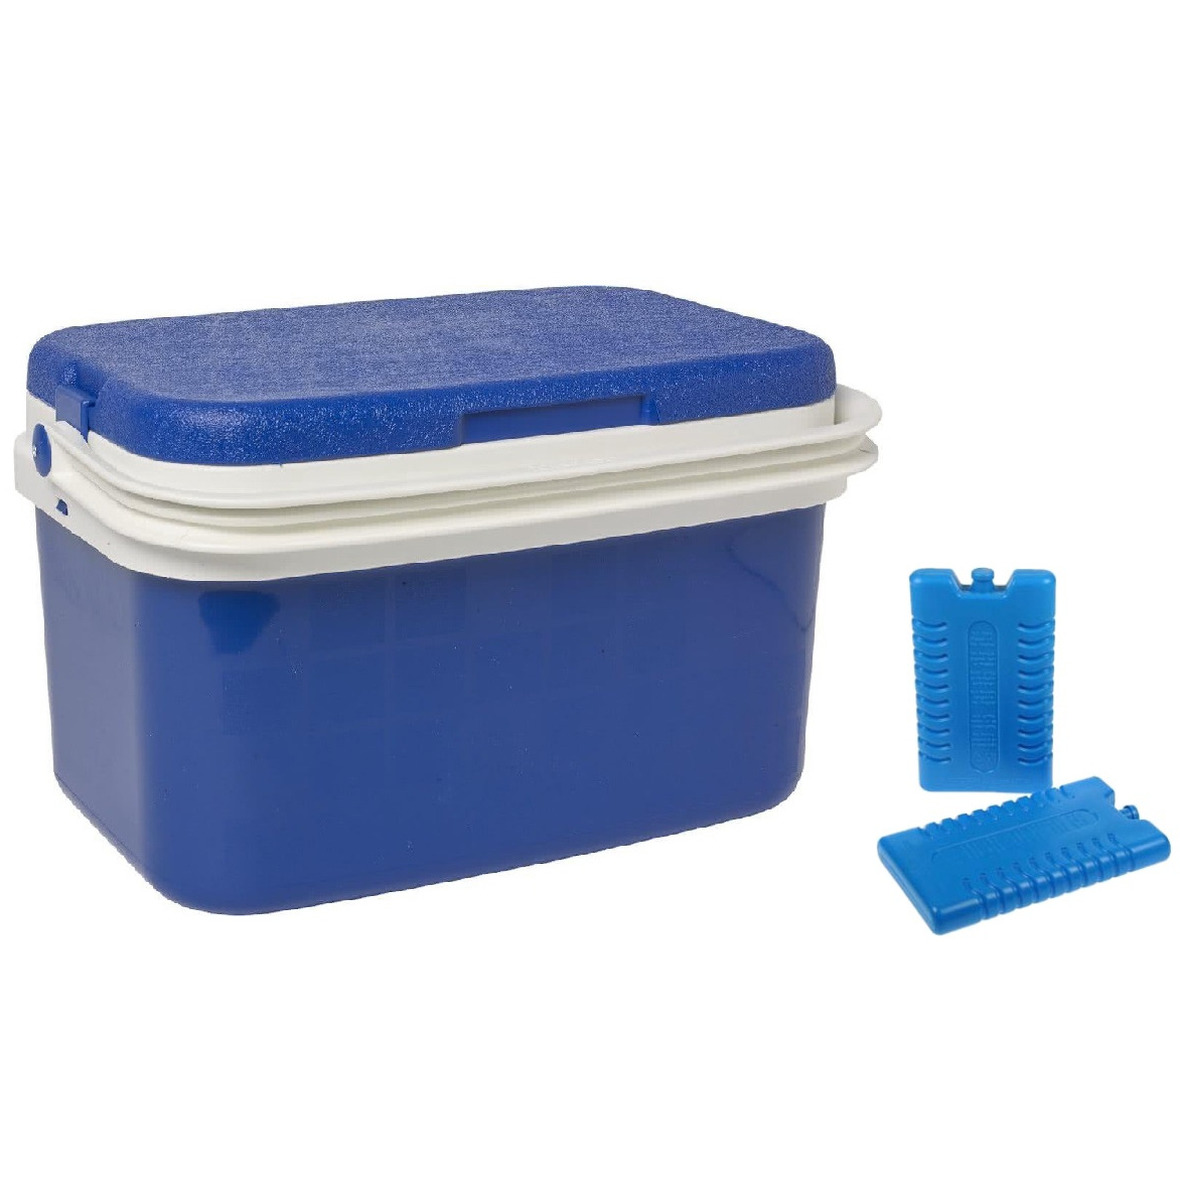 Shoppartners Koelbox donkerblauw 16 liter x 29 x 26 cm incl. 2 koelelementen -